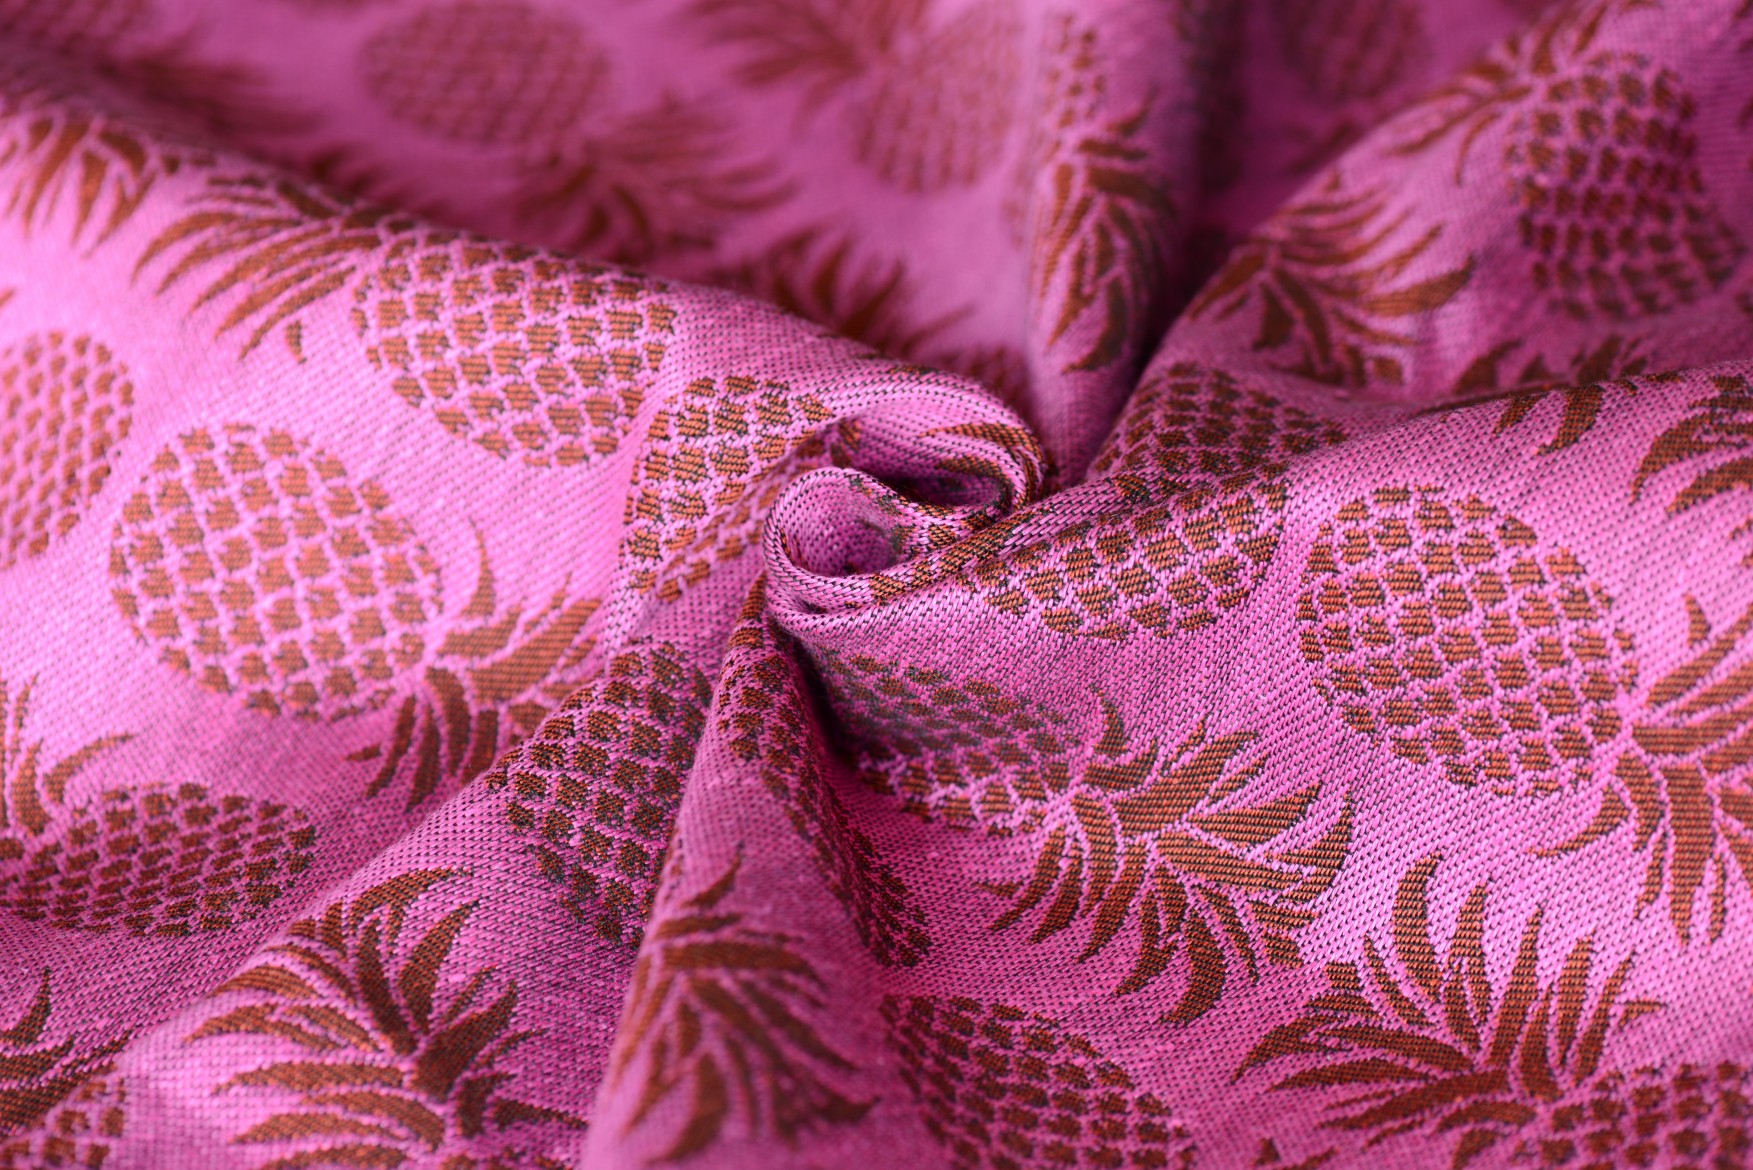 Artipoppe Pina Funk Wrap (hemp, linen, cashmere, mulberry silk) Image